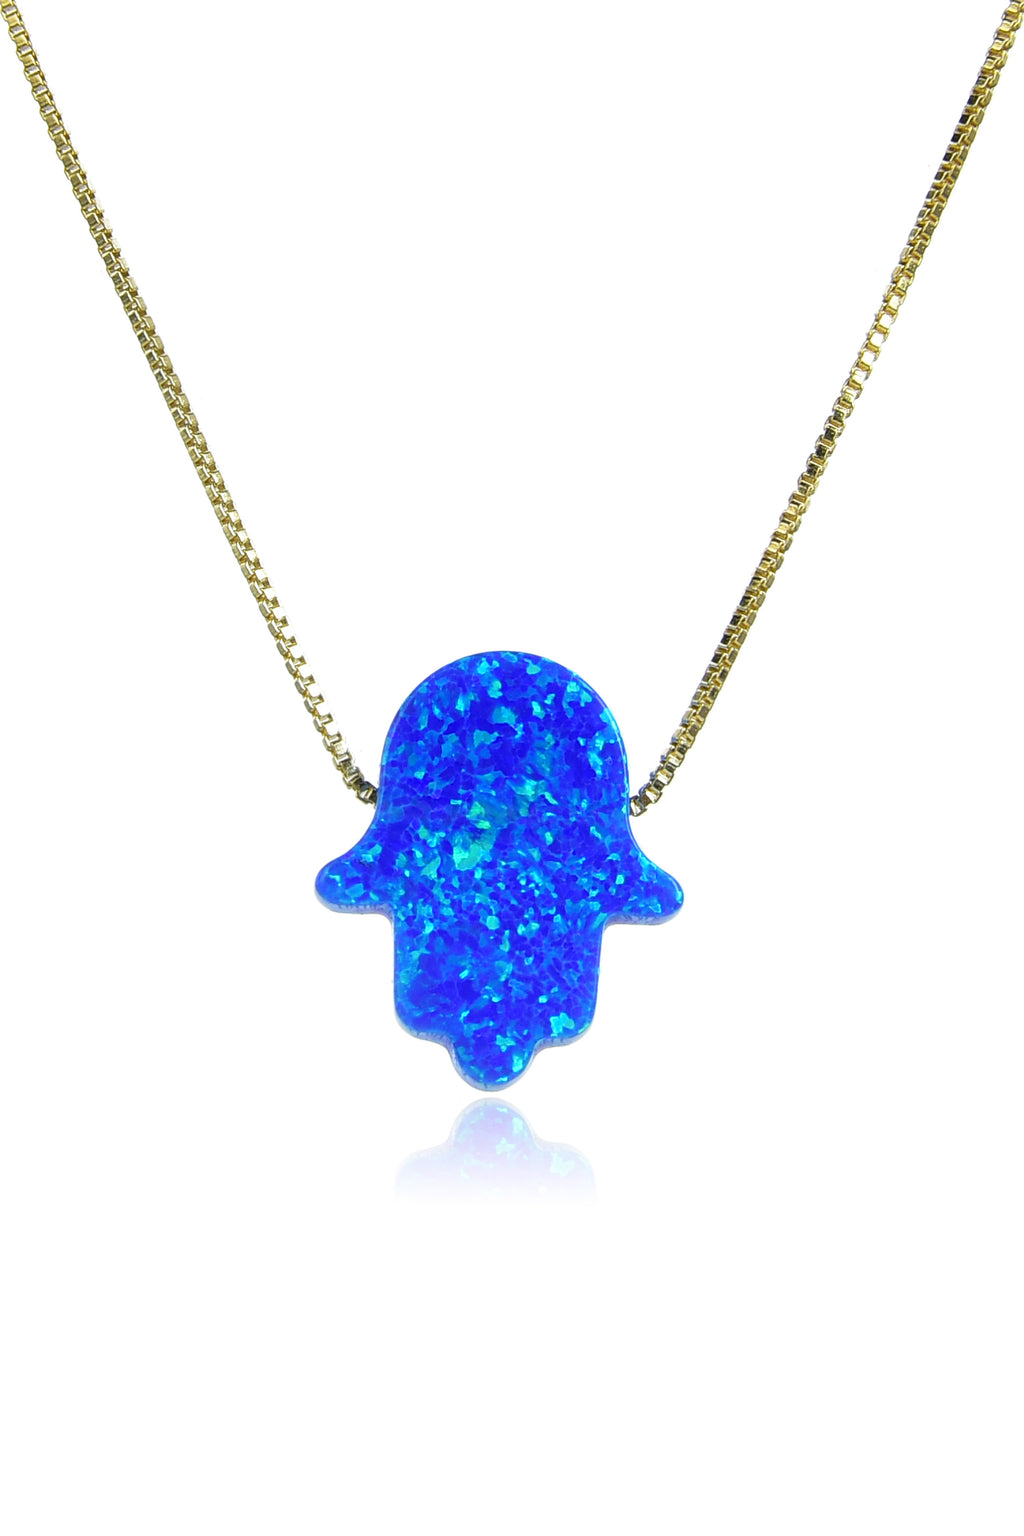 Small gold chain with shiny blue opal hamsa hand pendant.